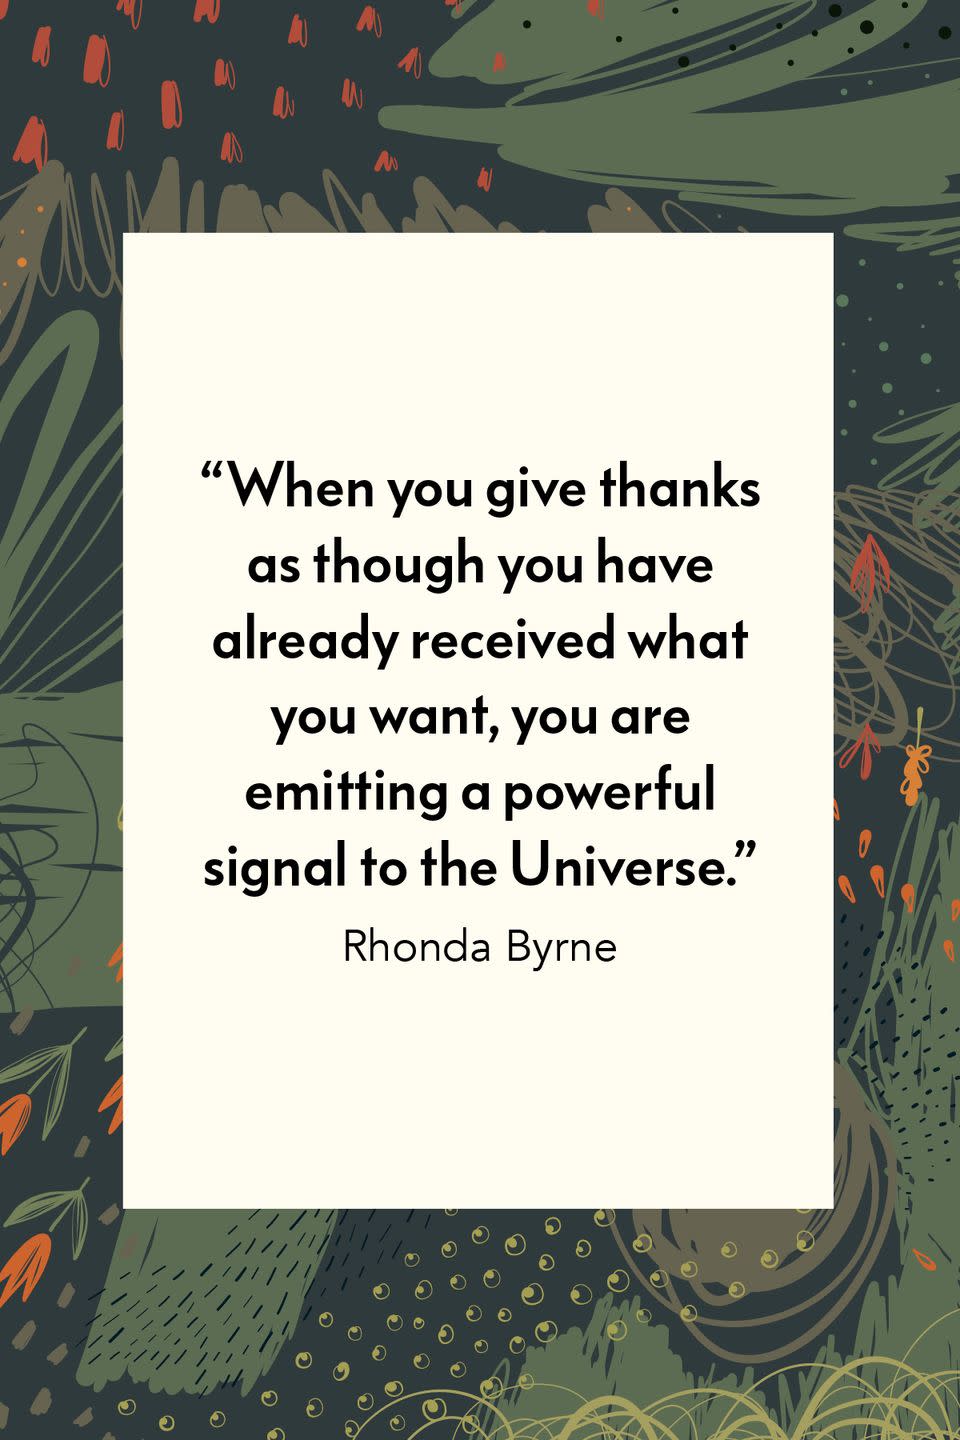 Rhonda Byrne